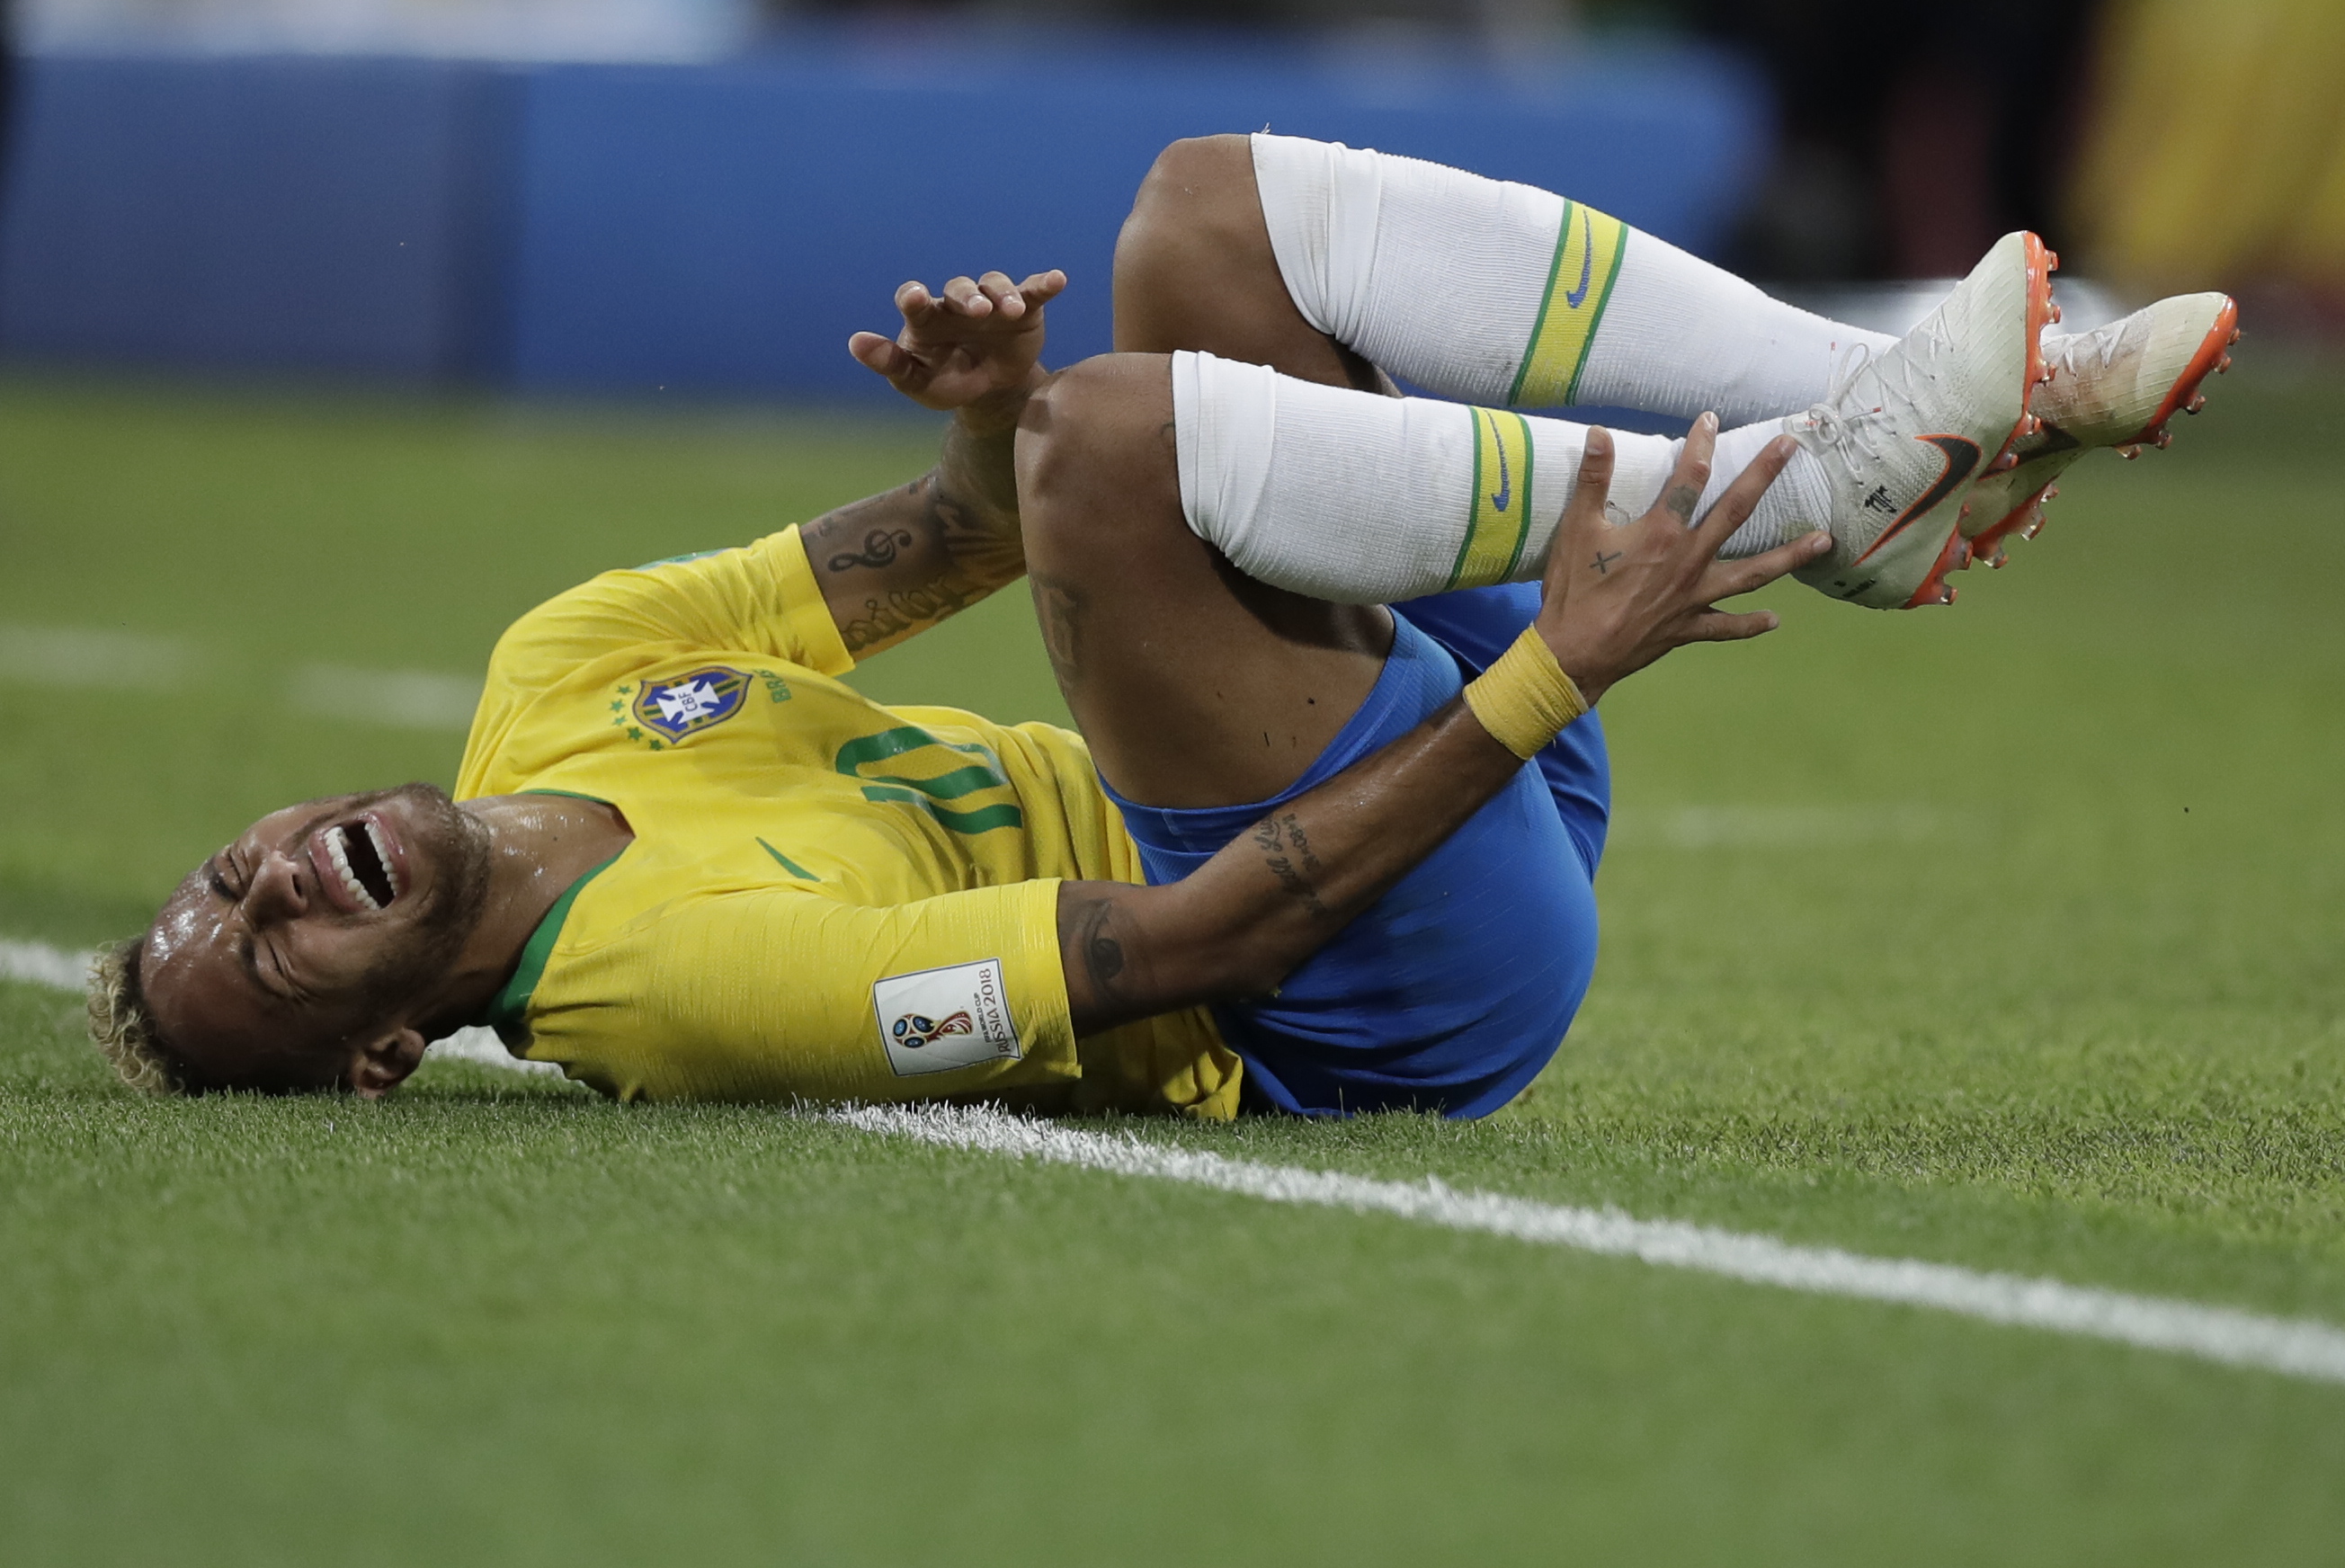 Neymar Rolling